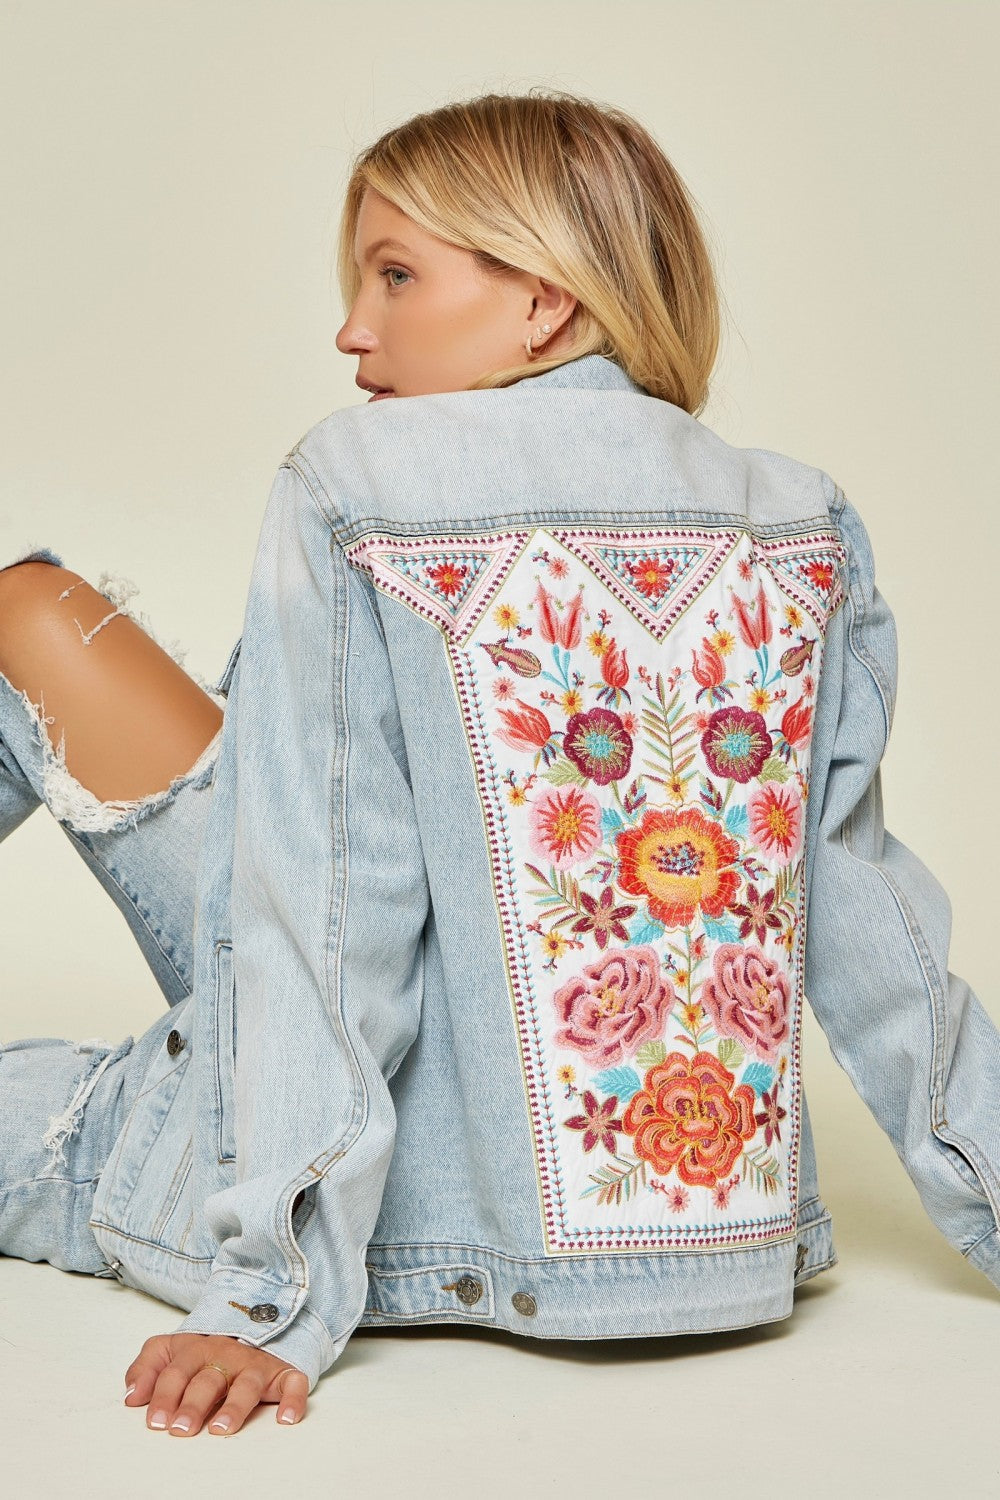 Savanna Jane Floral Embroidered Denim Jacket (Small to 3X) 2x